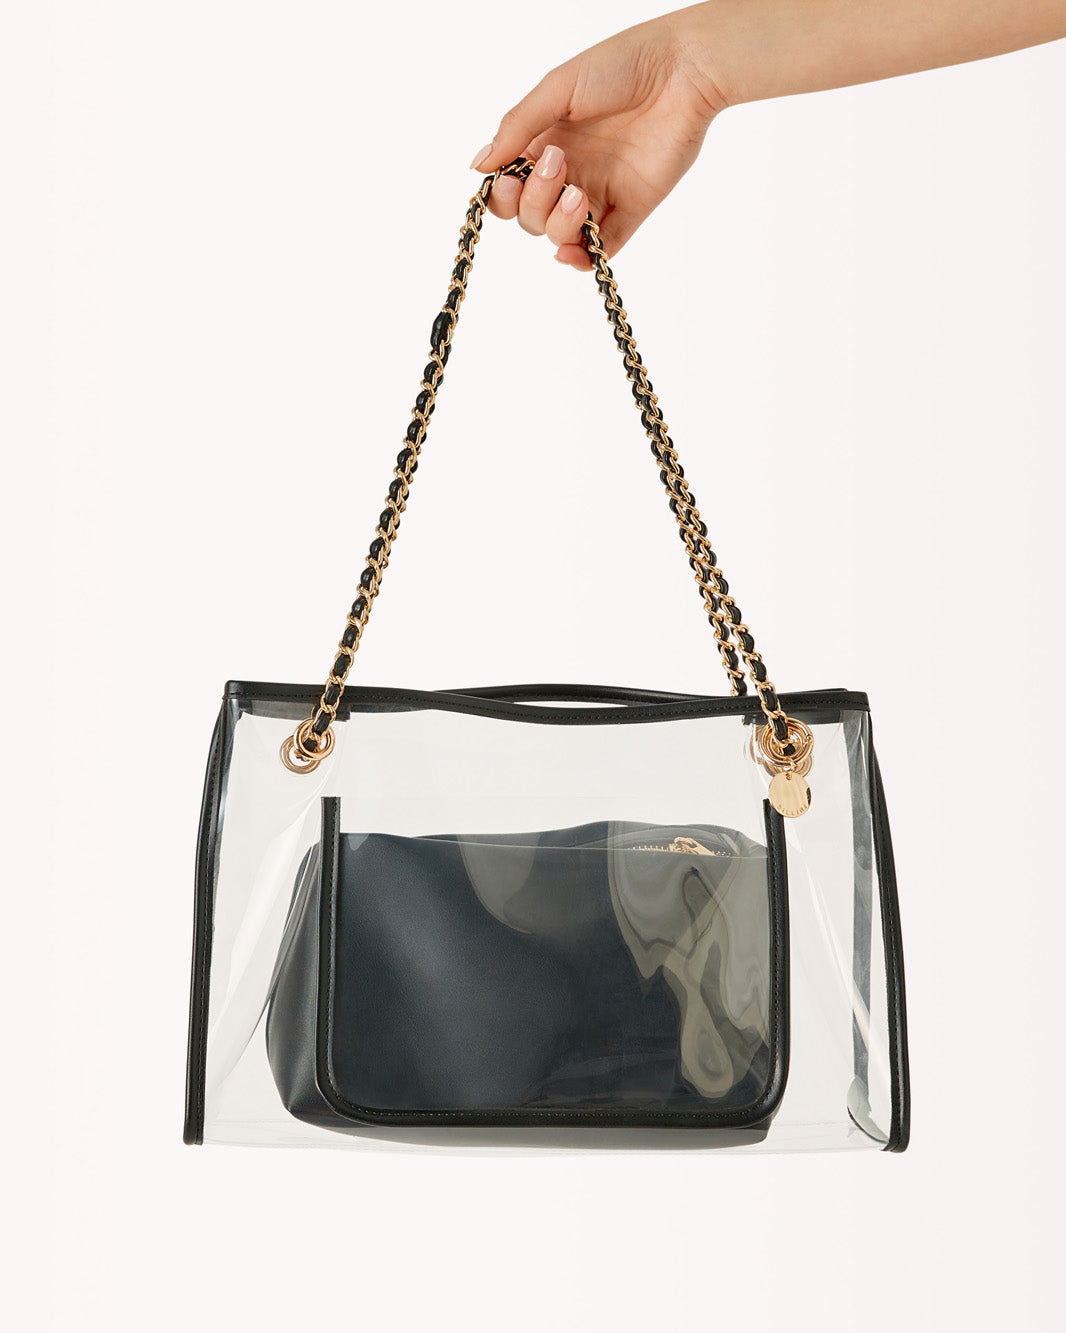 CALI TOTE BAG - BLACK-CLEAR-Handbags-Billini-O/S-BILLINI USA